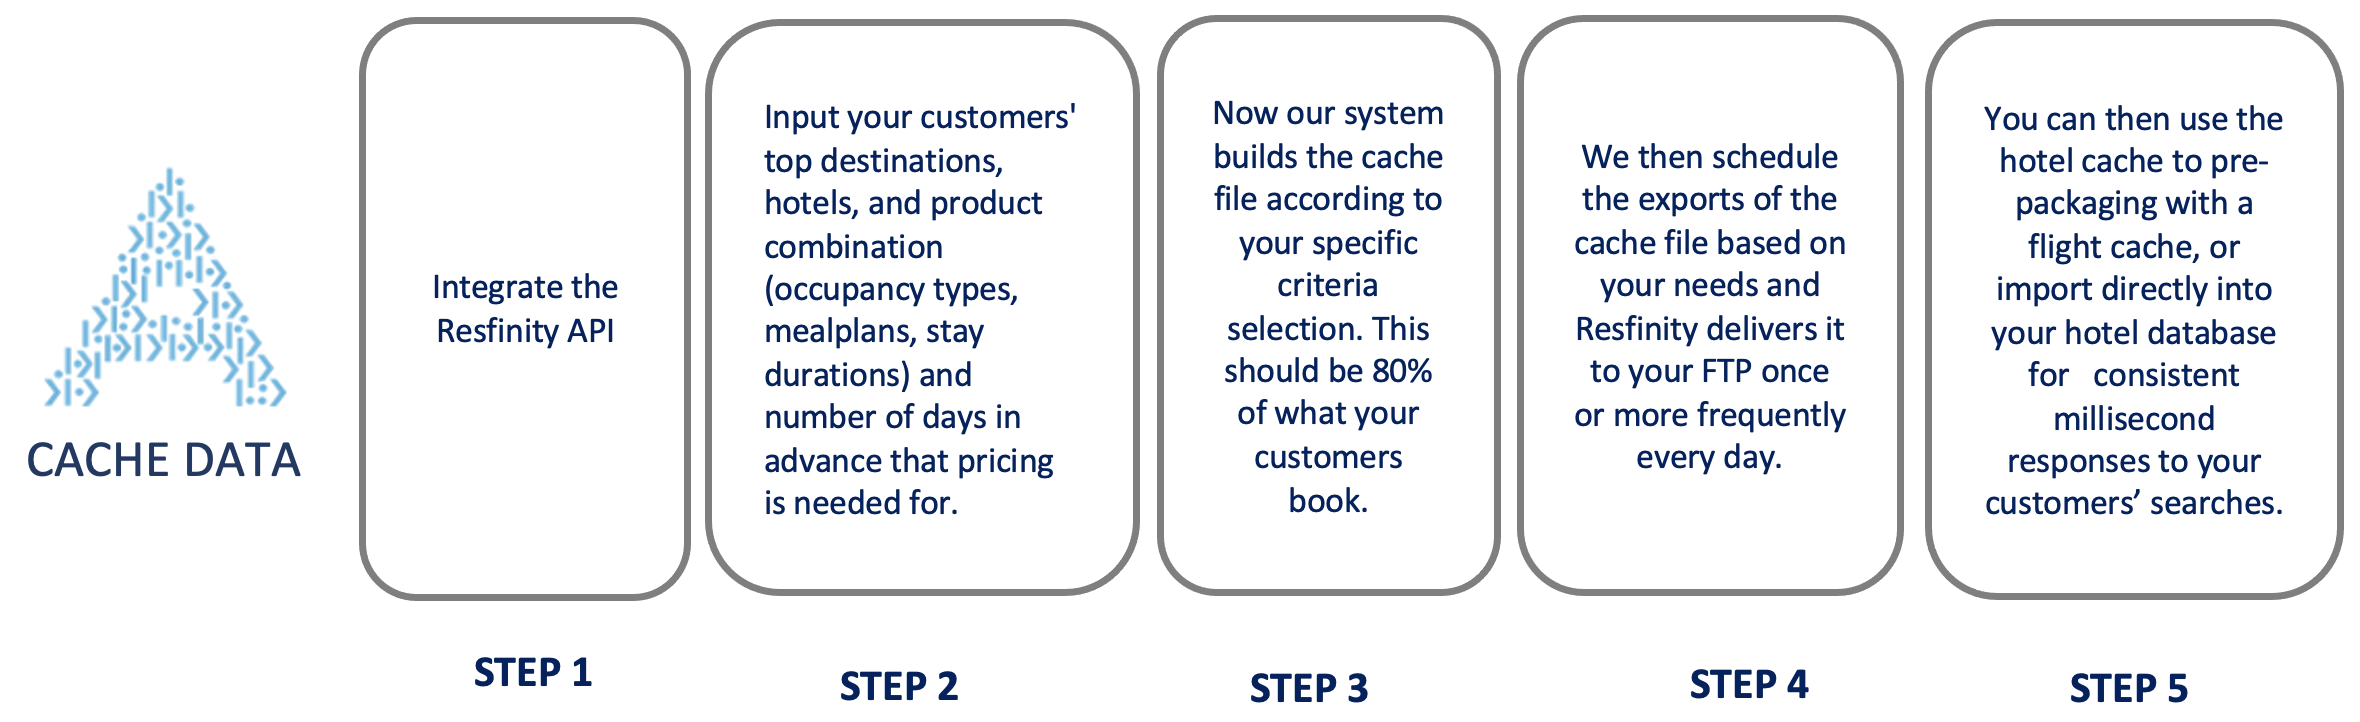 cache data 5 steps diagram